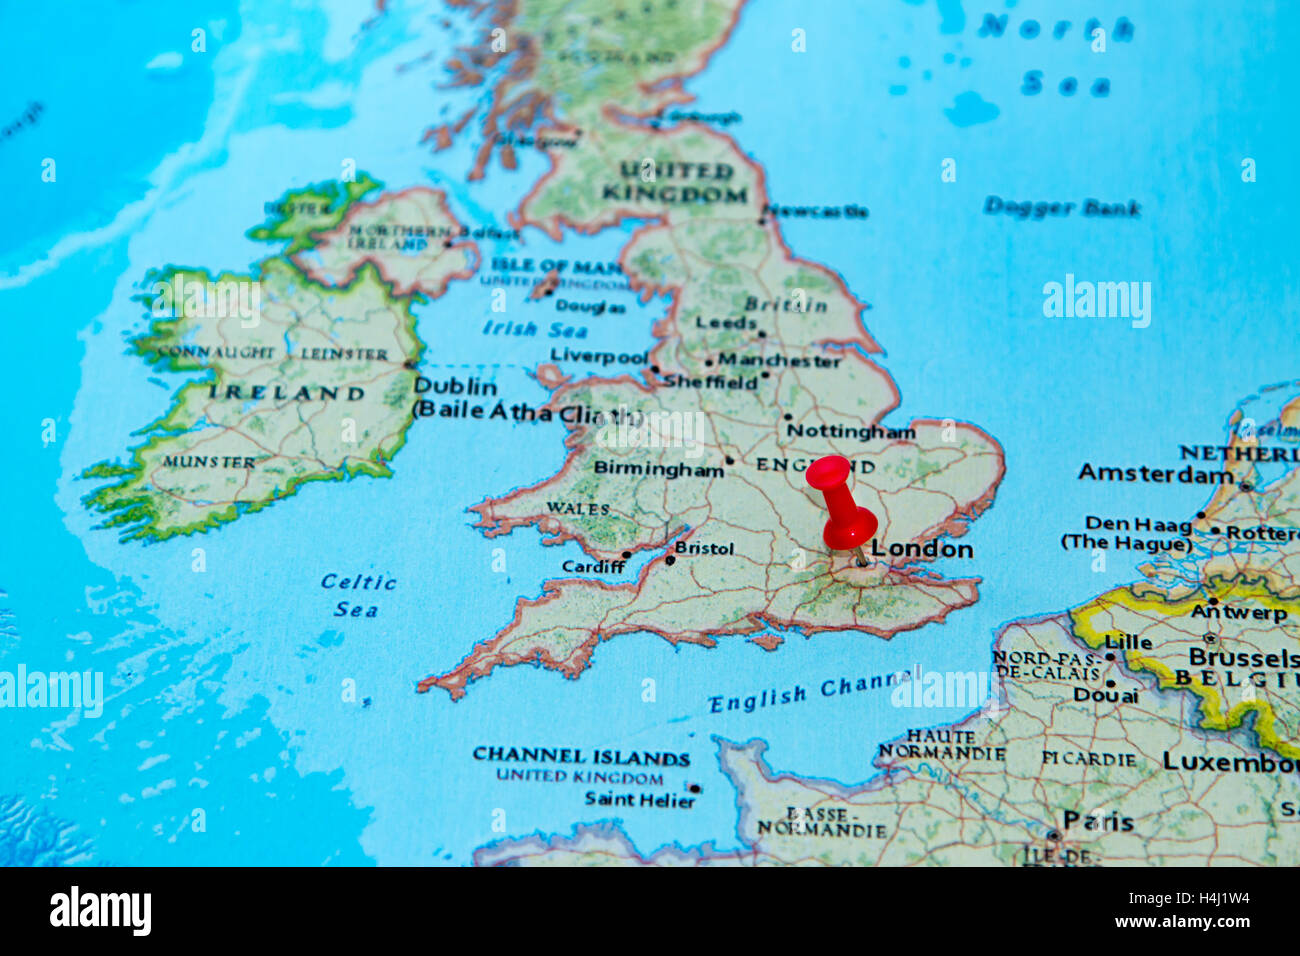 London, U.K. pinned on a map of Europe Stock Photo - Alamy